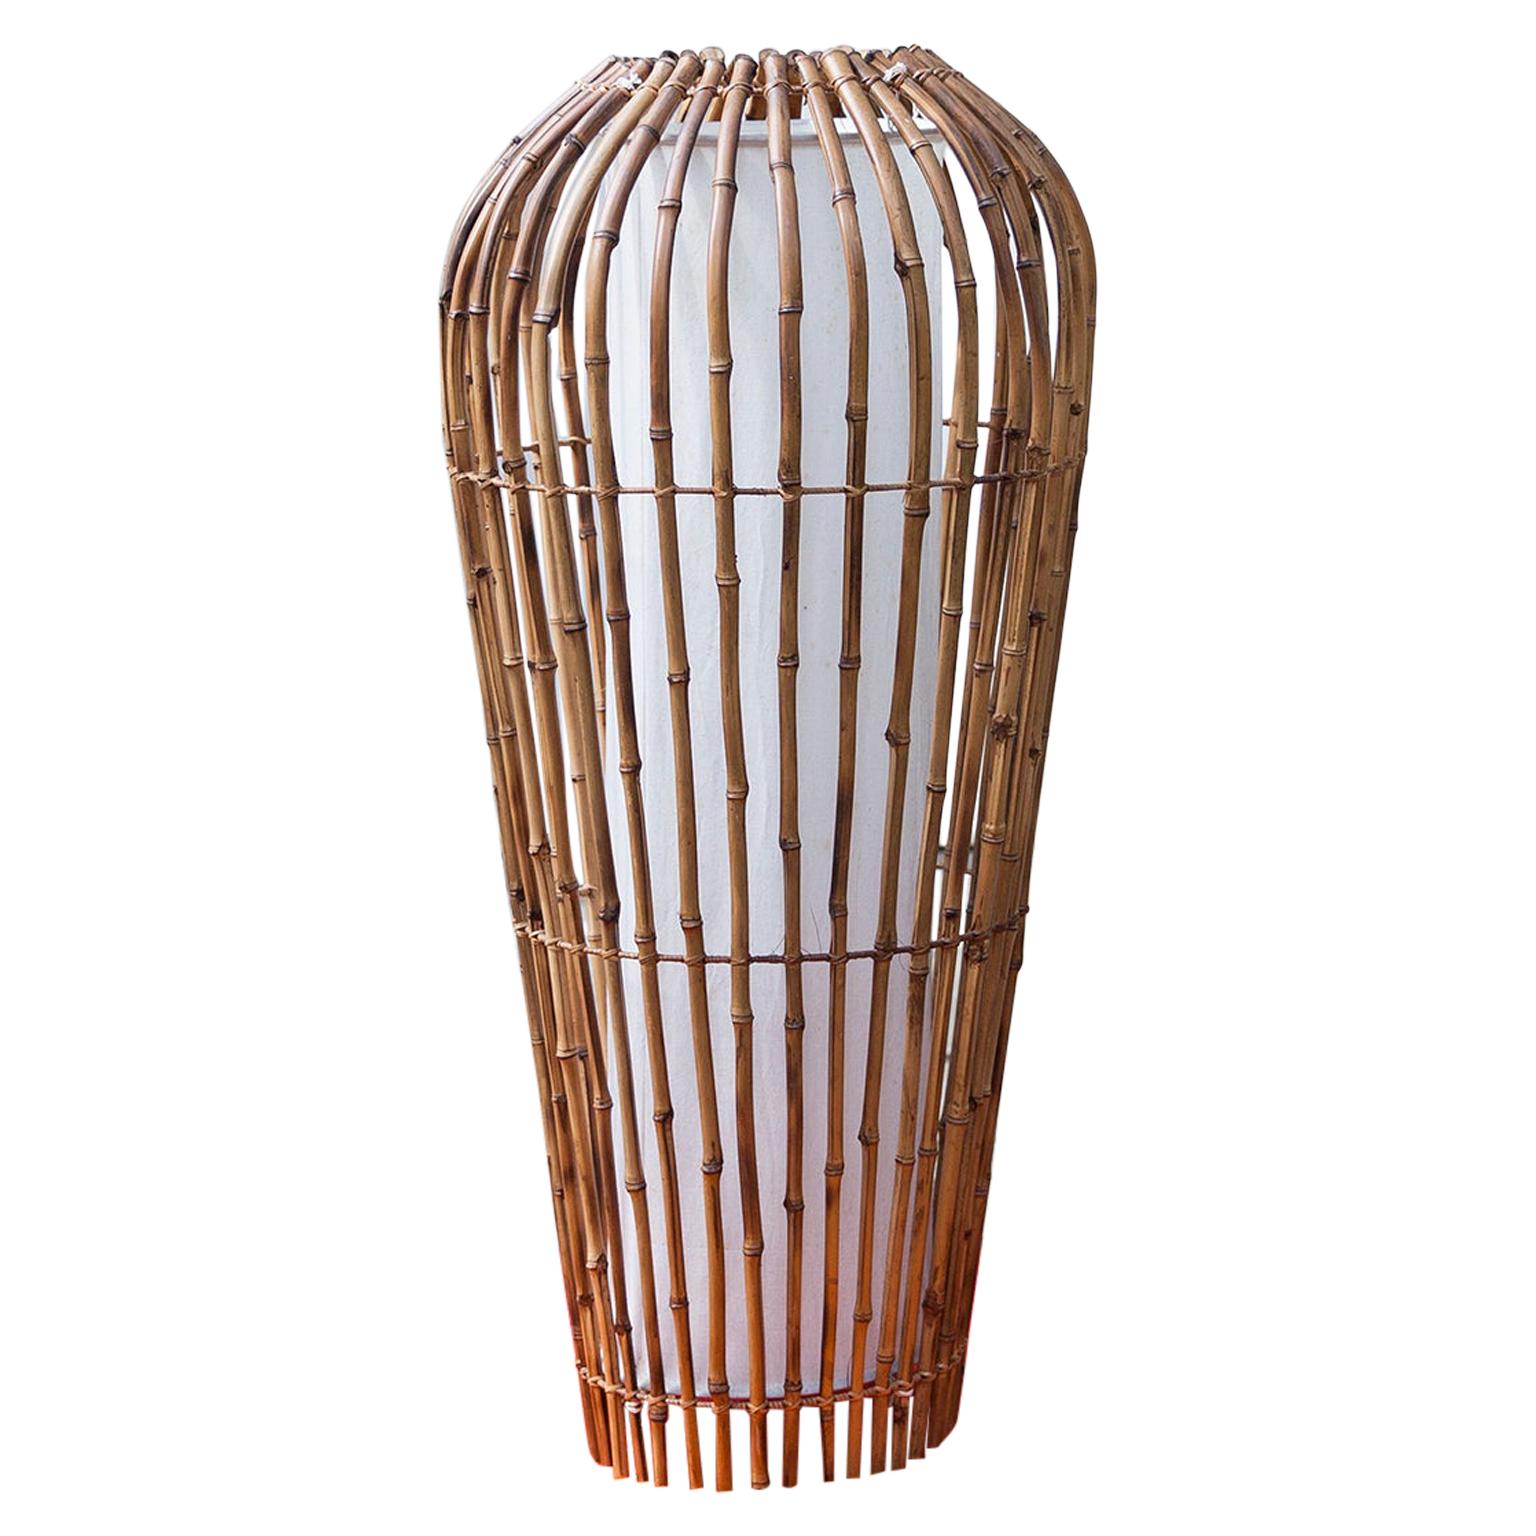 Lampadaire cocon en bambou, France, 1950